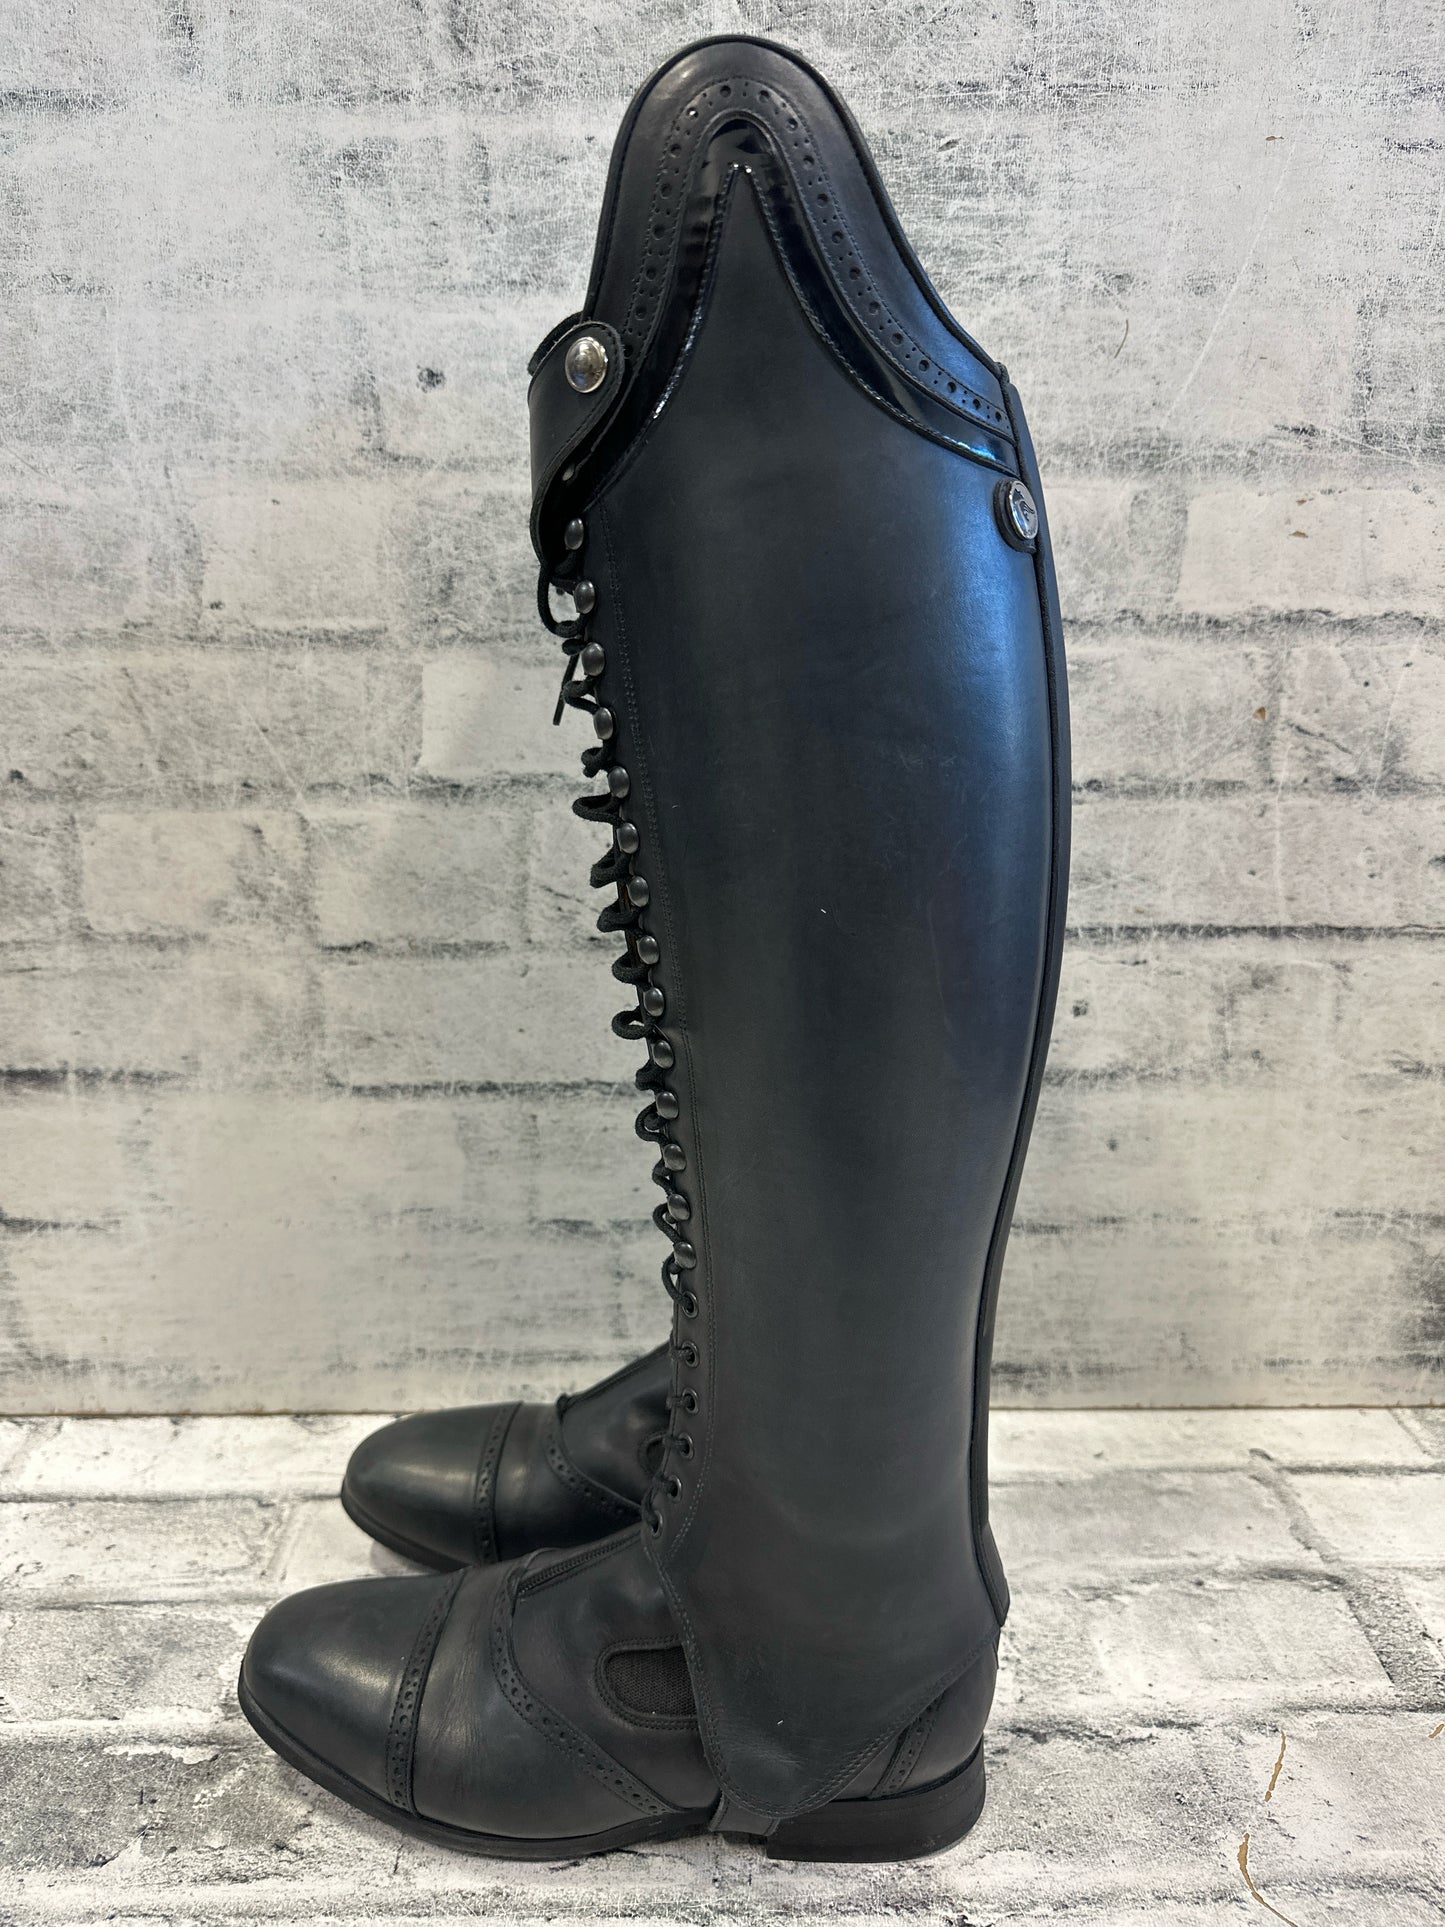 Celeris Custom Boots w Chaps Black 9.5